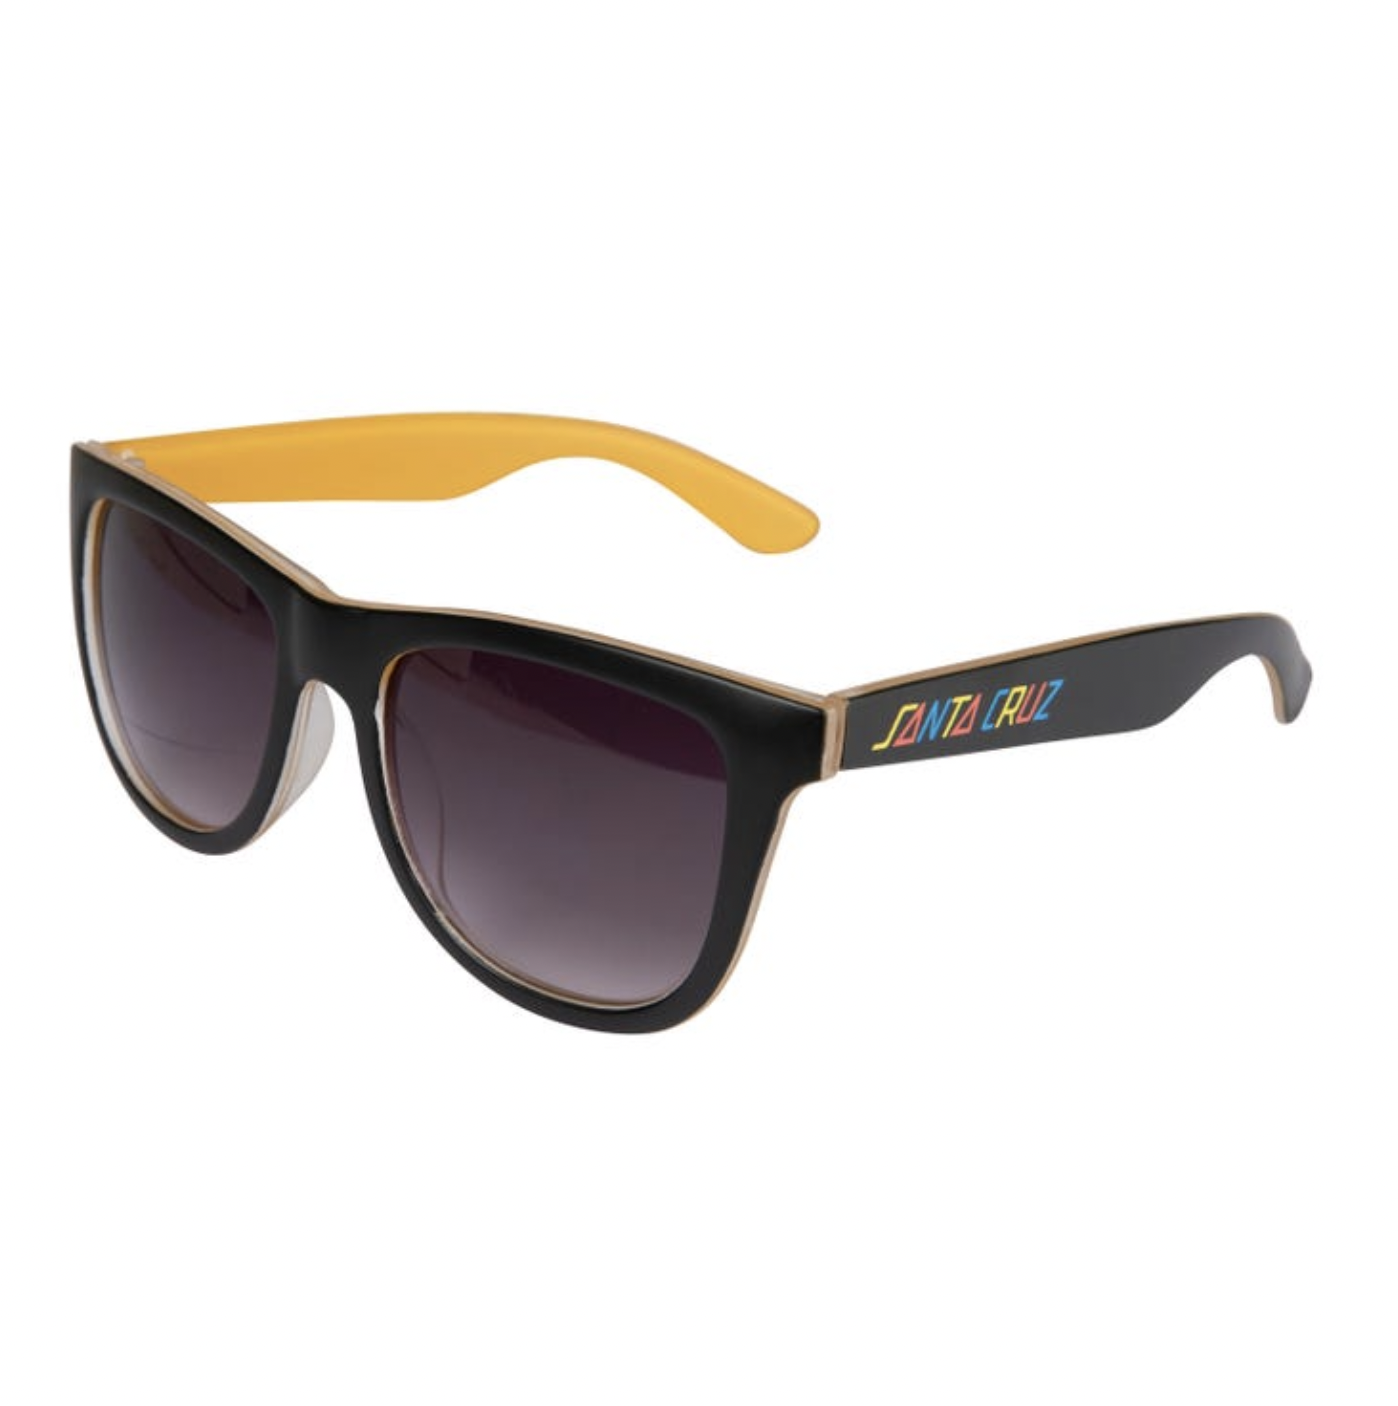 Strip In Colour Sunglasses Black/Mango SANTA CRUZ